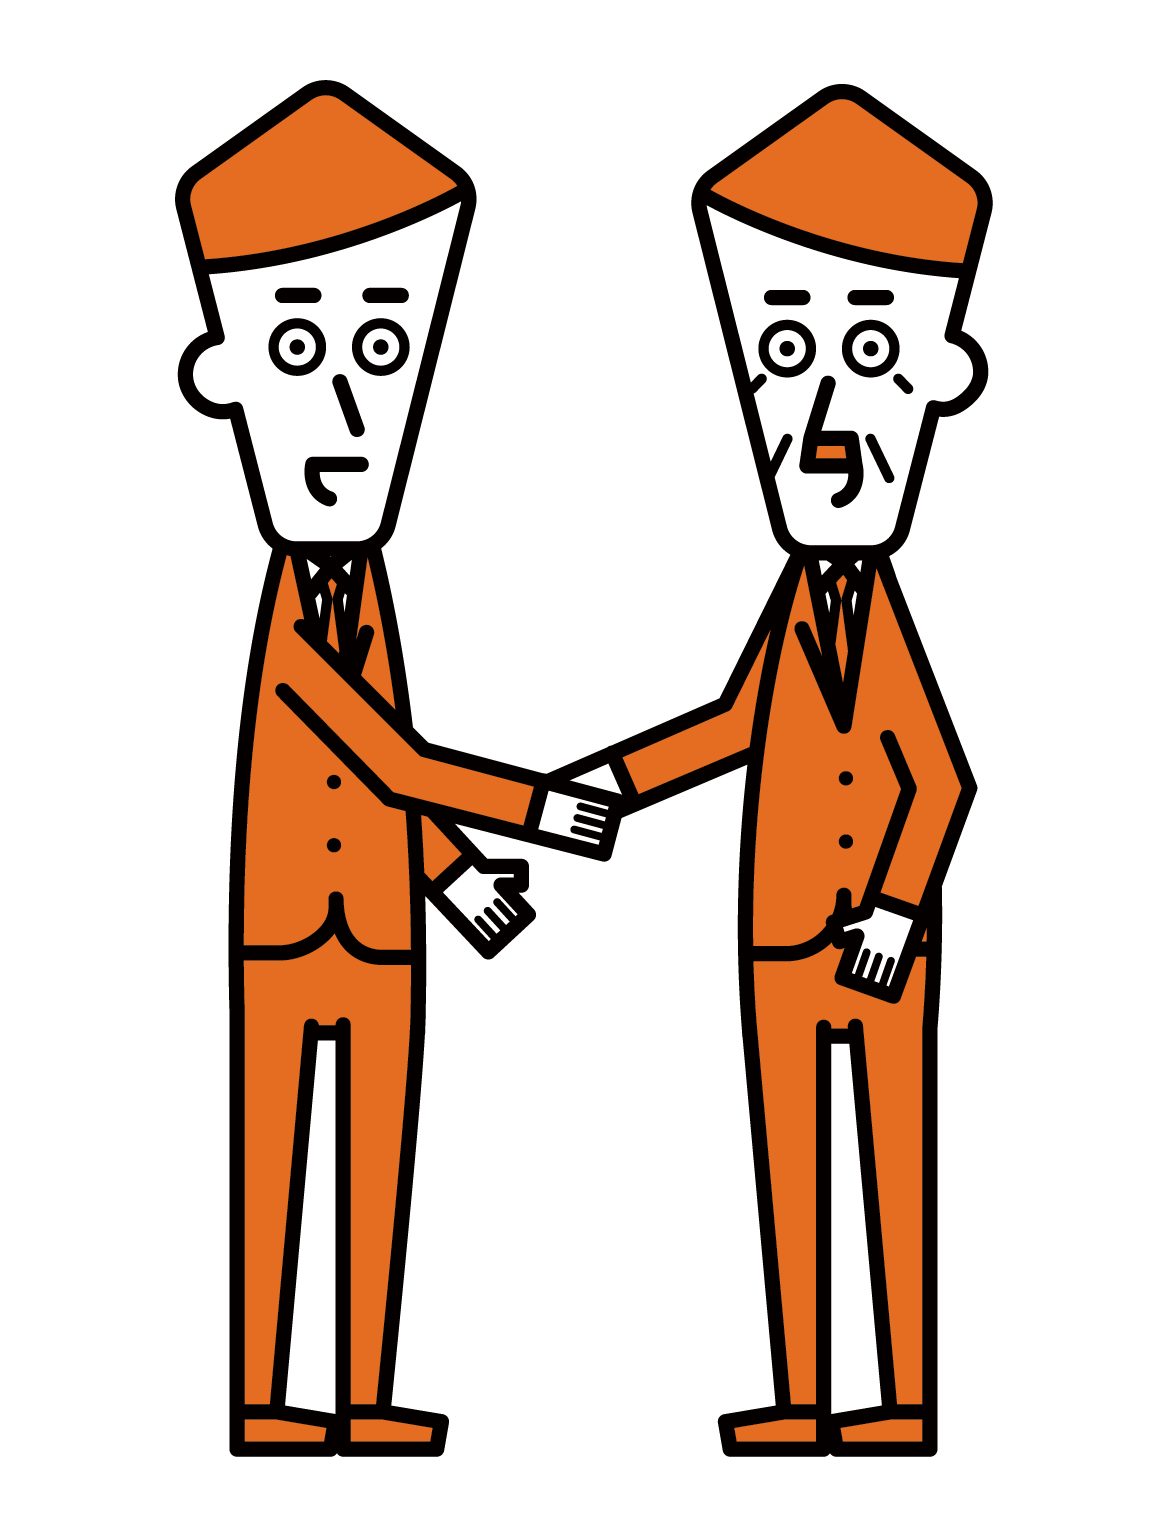 Illustration of a man shaking hands